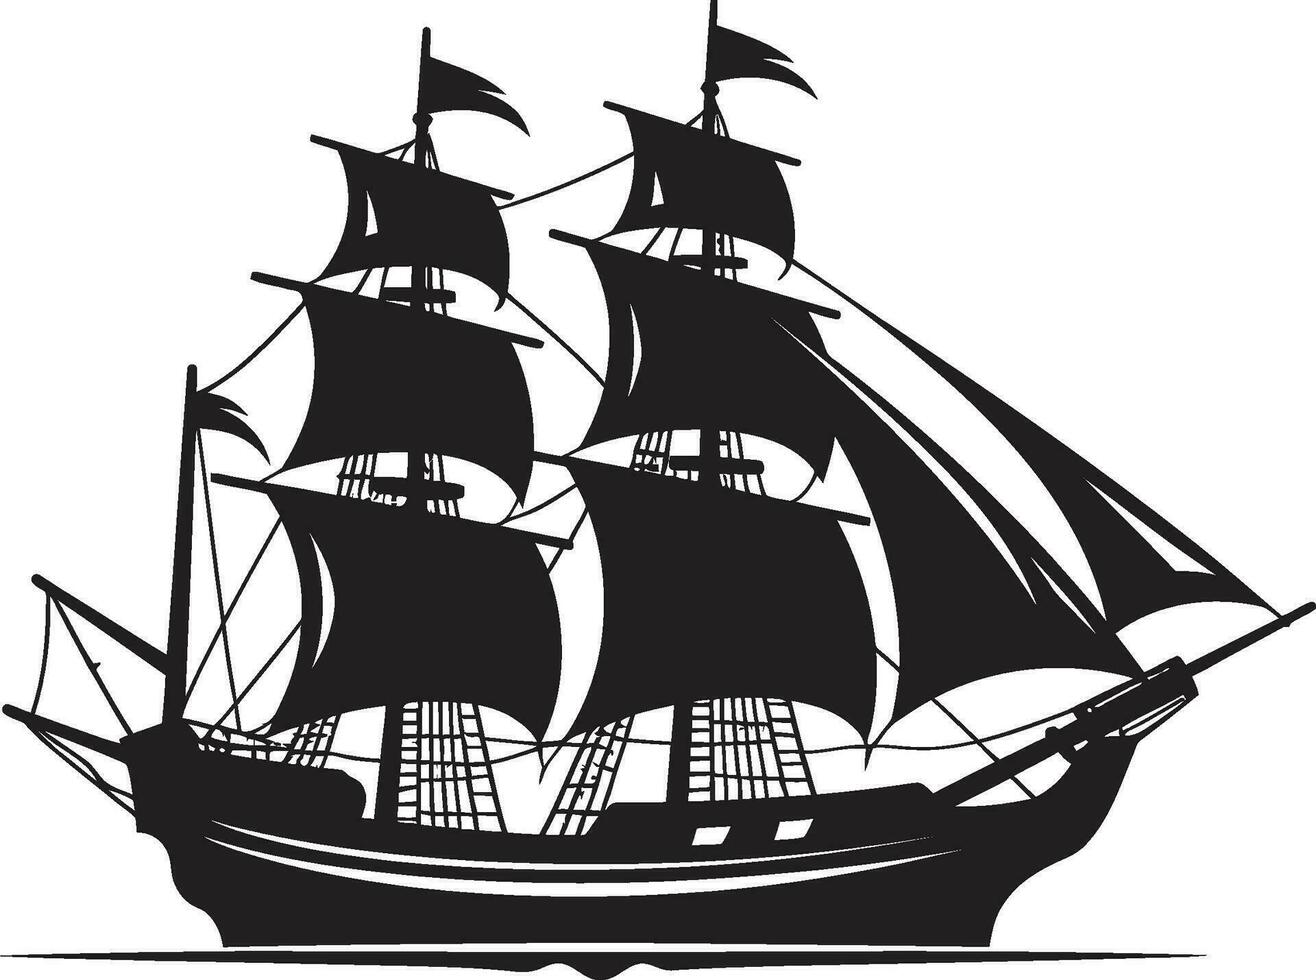 Mythical Galleon Ancient Vessel Emblem Vintage Seafaring Black Ship Logo vector